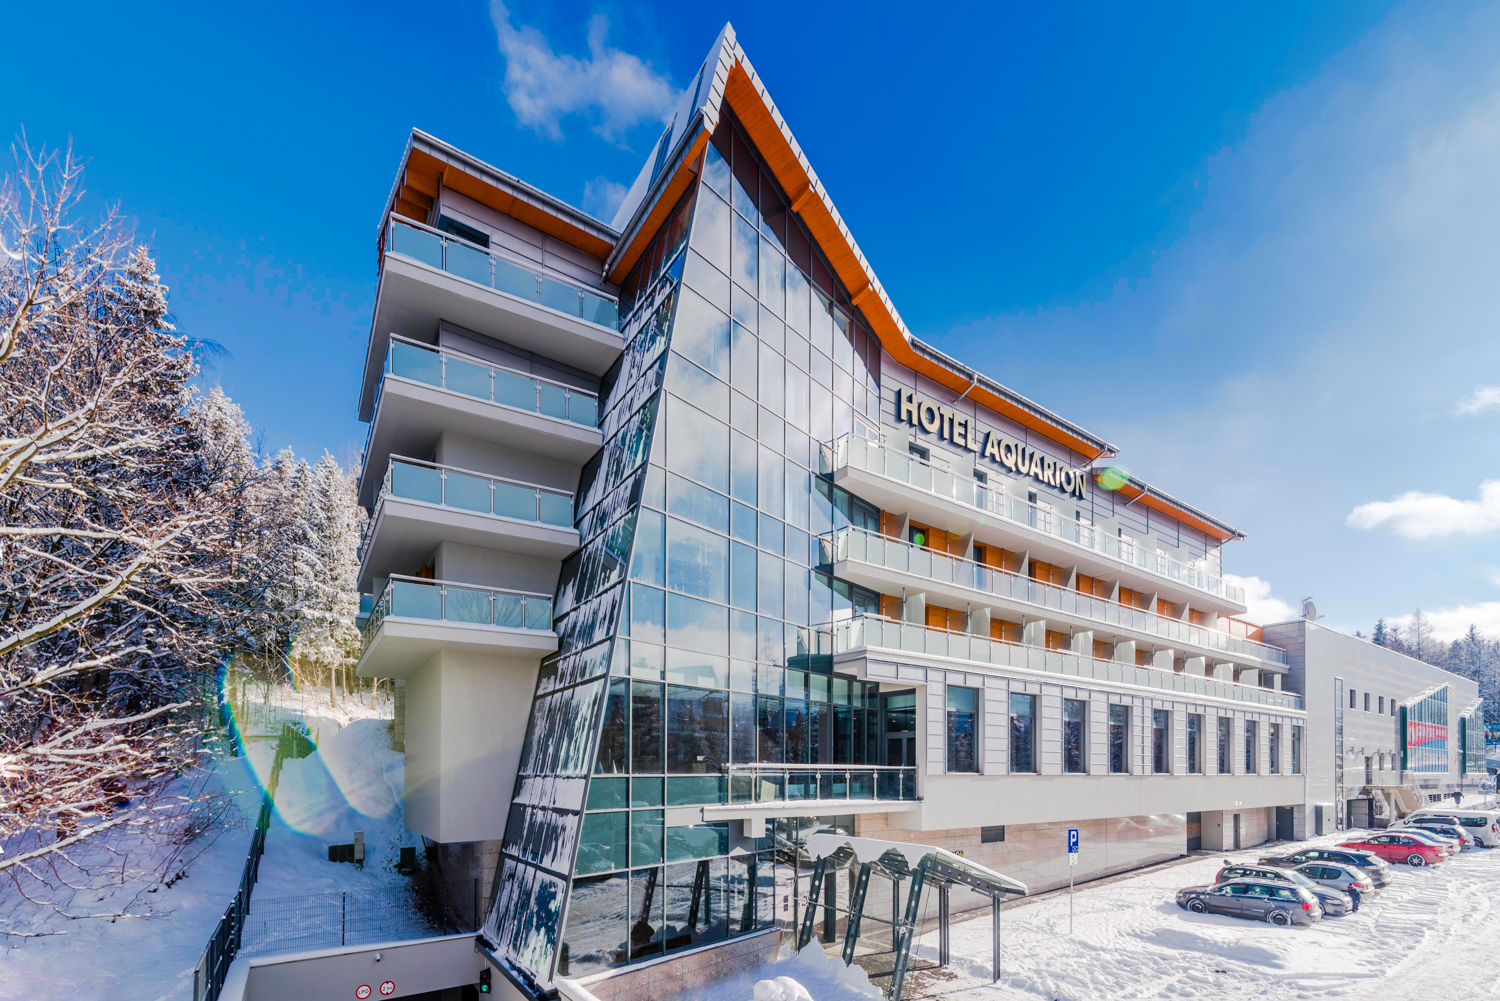 The 4-star hotel Aquarion in Zakopane, Poland, built by Eiffage Polska Budownictwo, opens its doors to the public